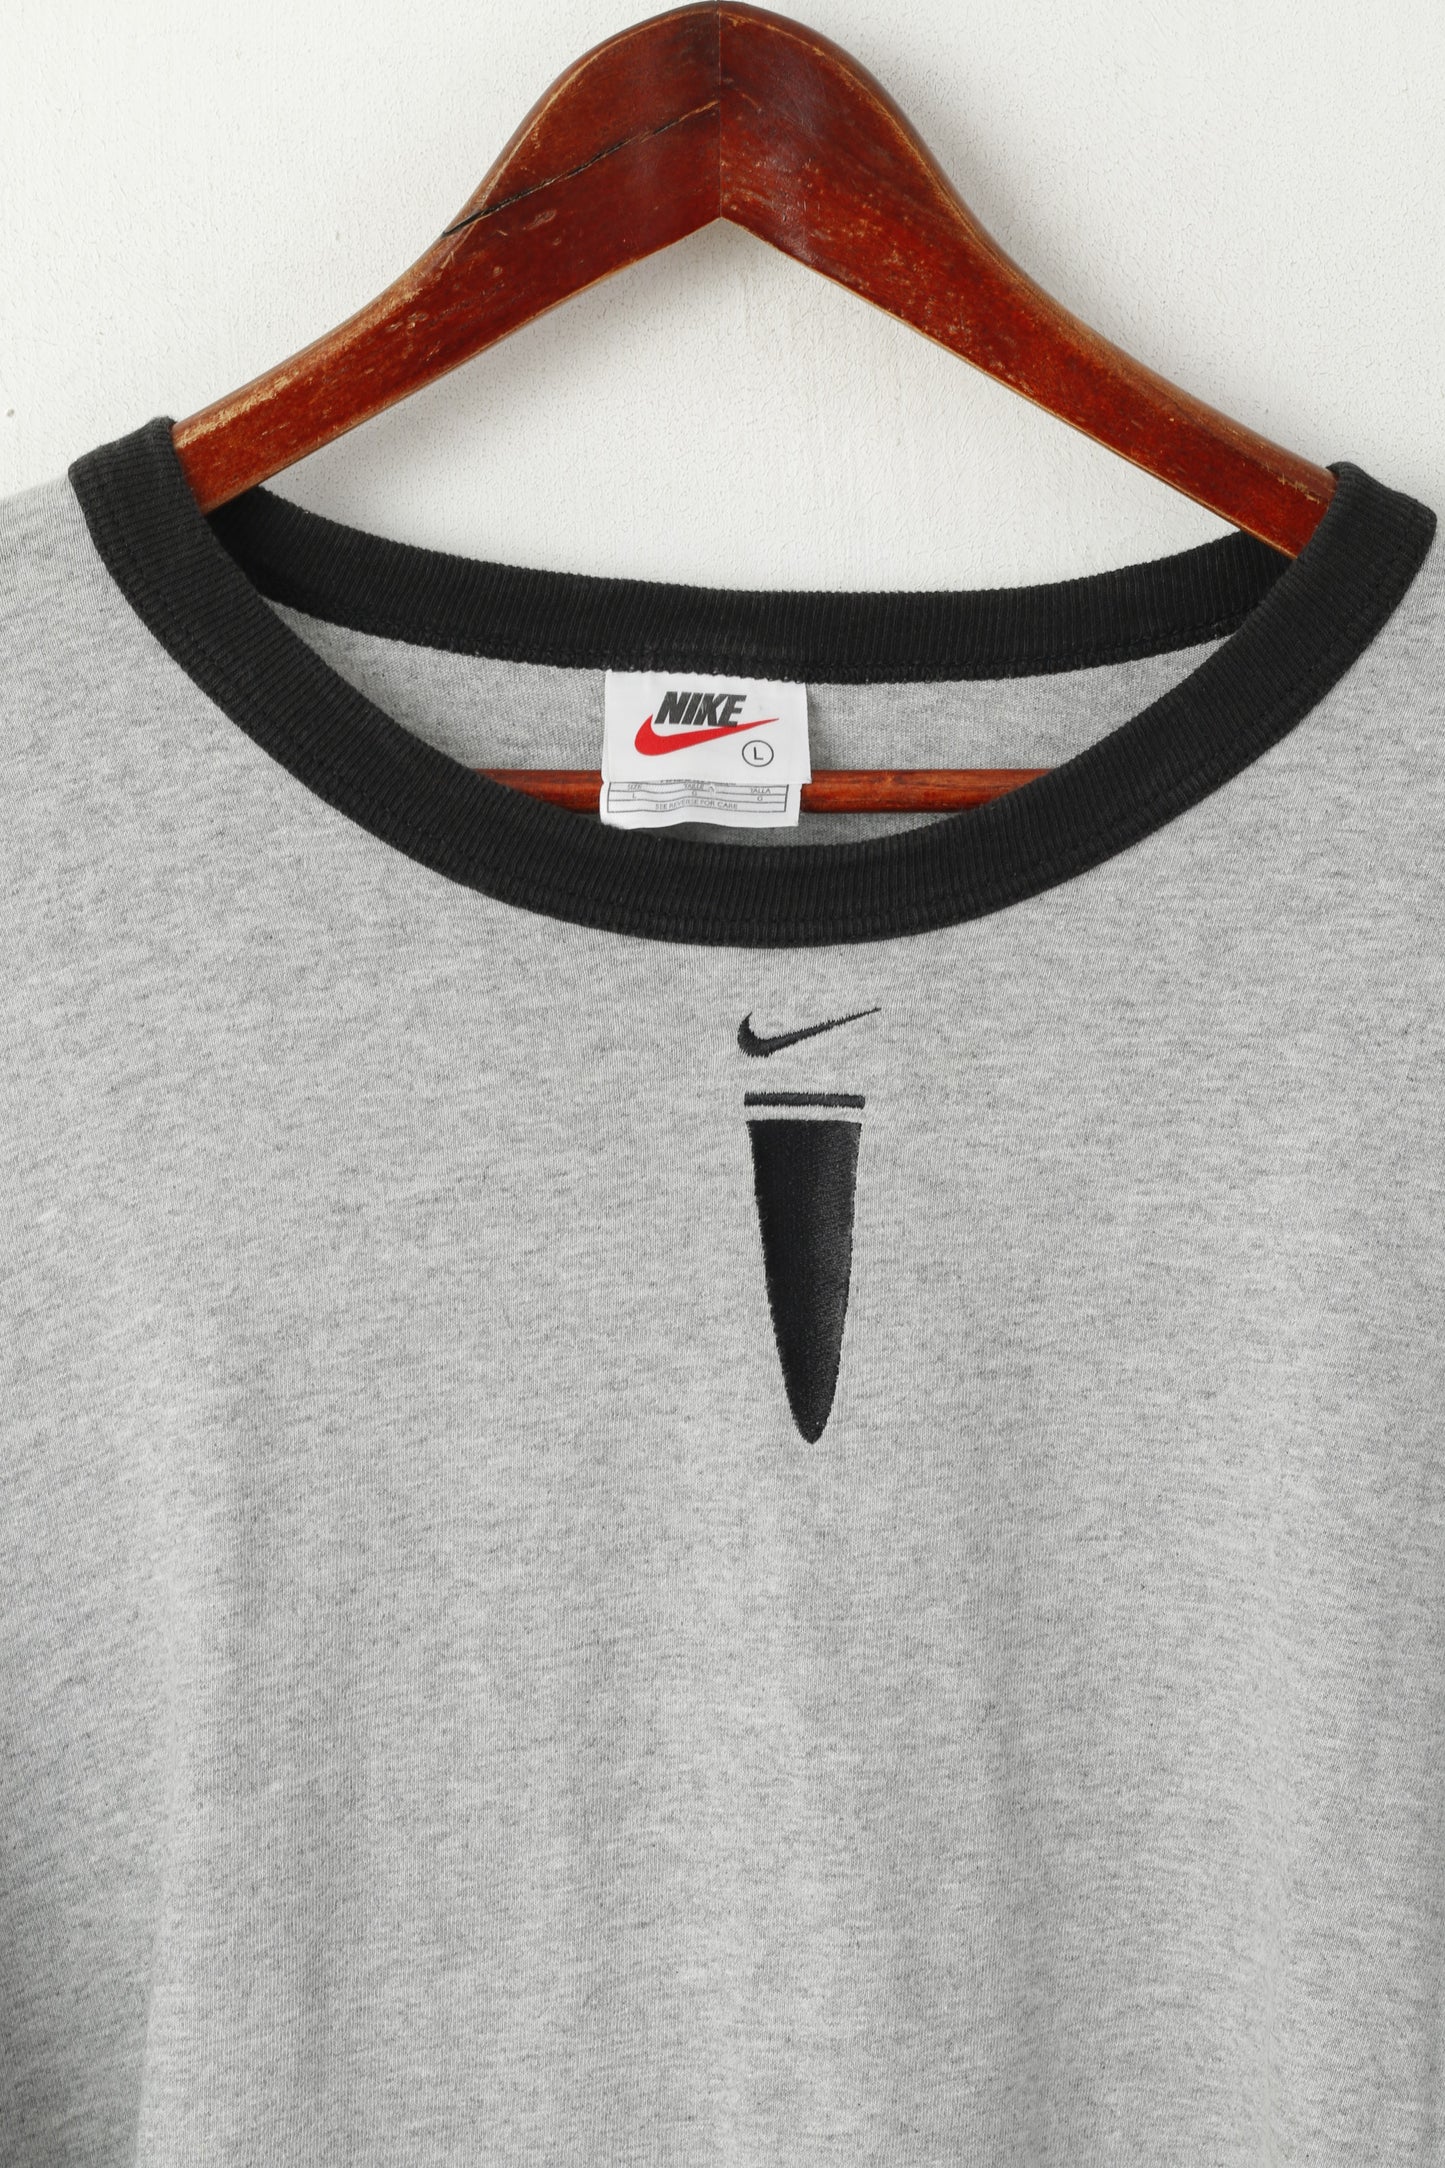 Nike Men L Shirt Grey Cotton Vintage 90s Long Sleeve Oversize Oldschool Top